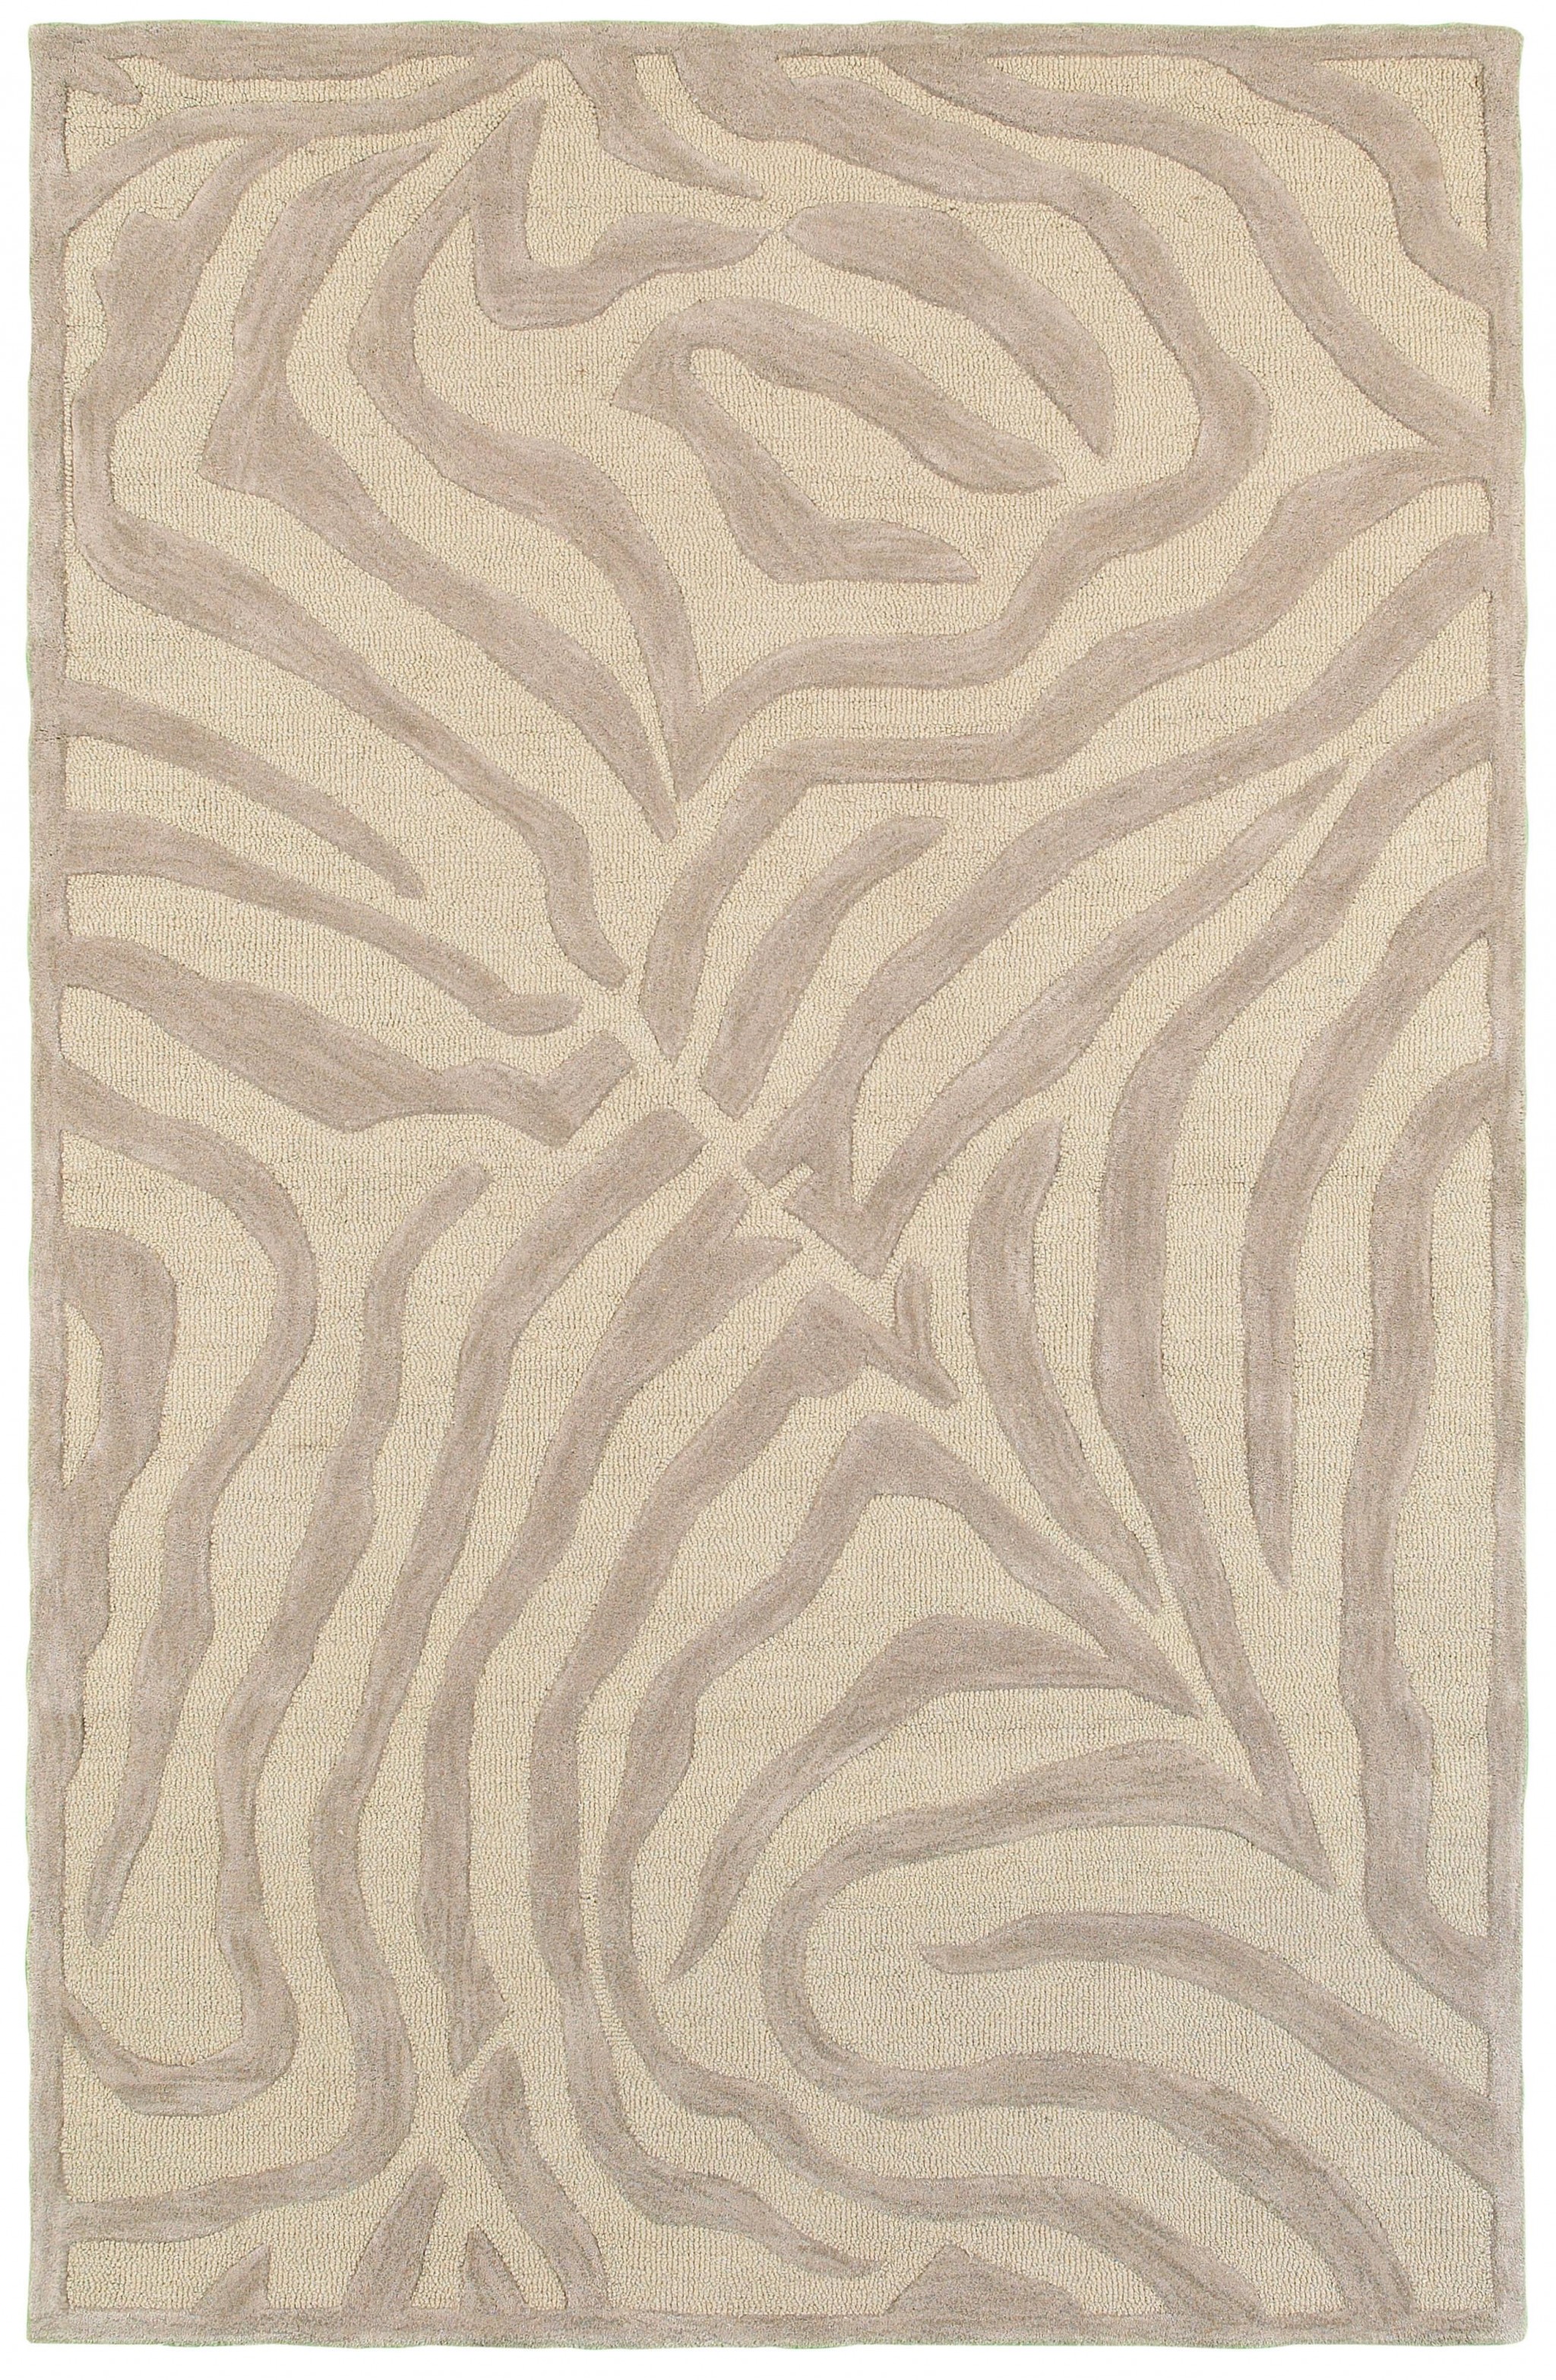 8’ x 10' Taupe Zebra Pattern Area Rug-395617-1